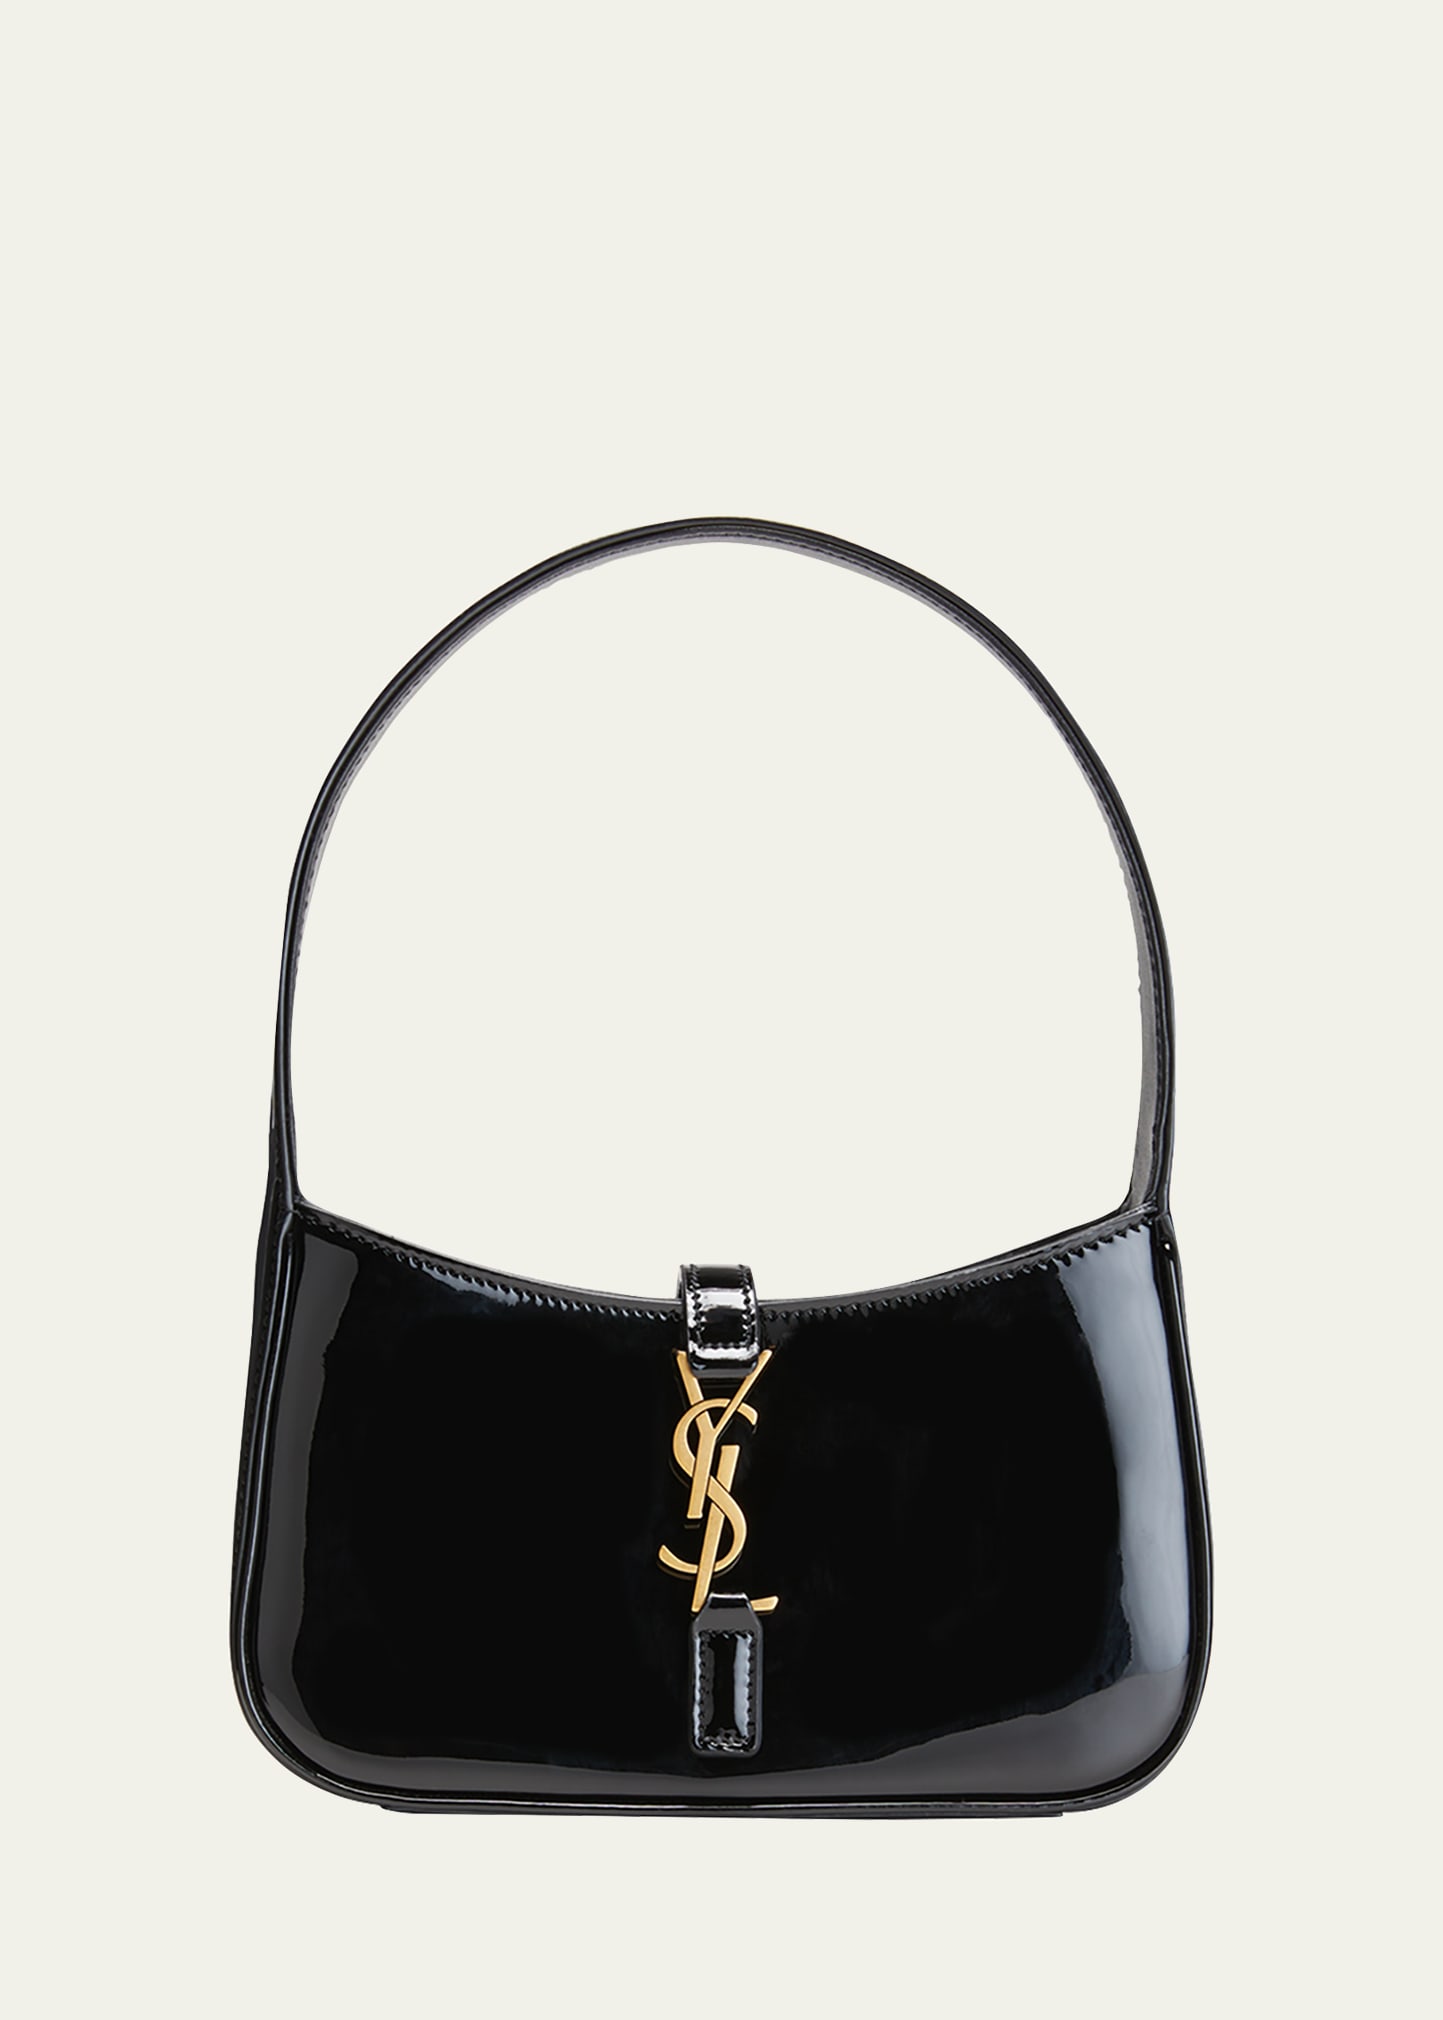 Saint Laurent Le 5a7 Ysl Patent Leather Shoulder Bag In Nero